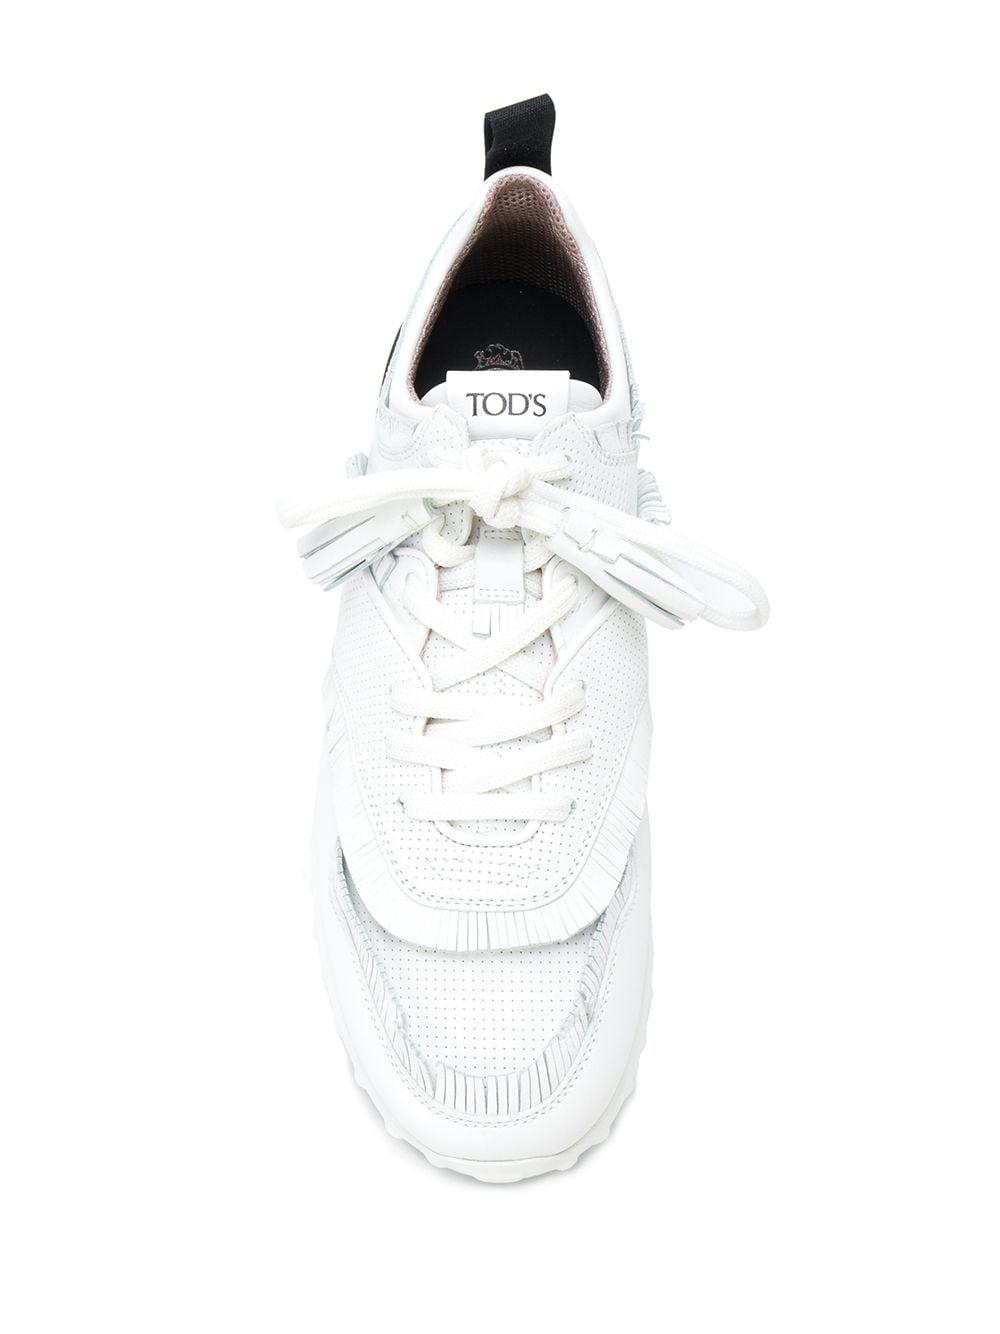 Tod's Fringed Runner Sneakers in White | Lyst